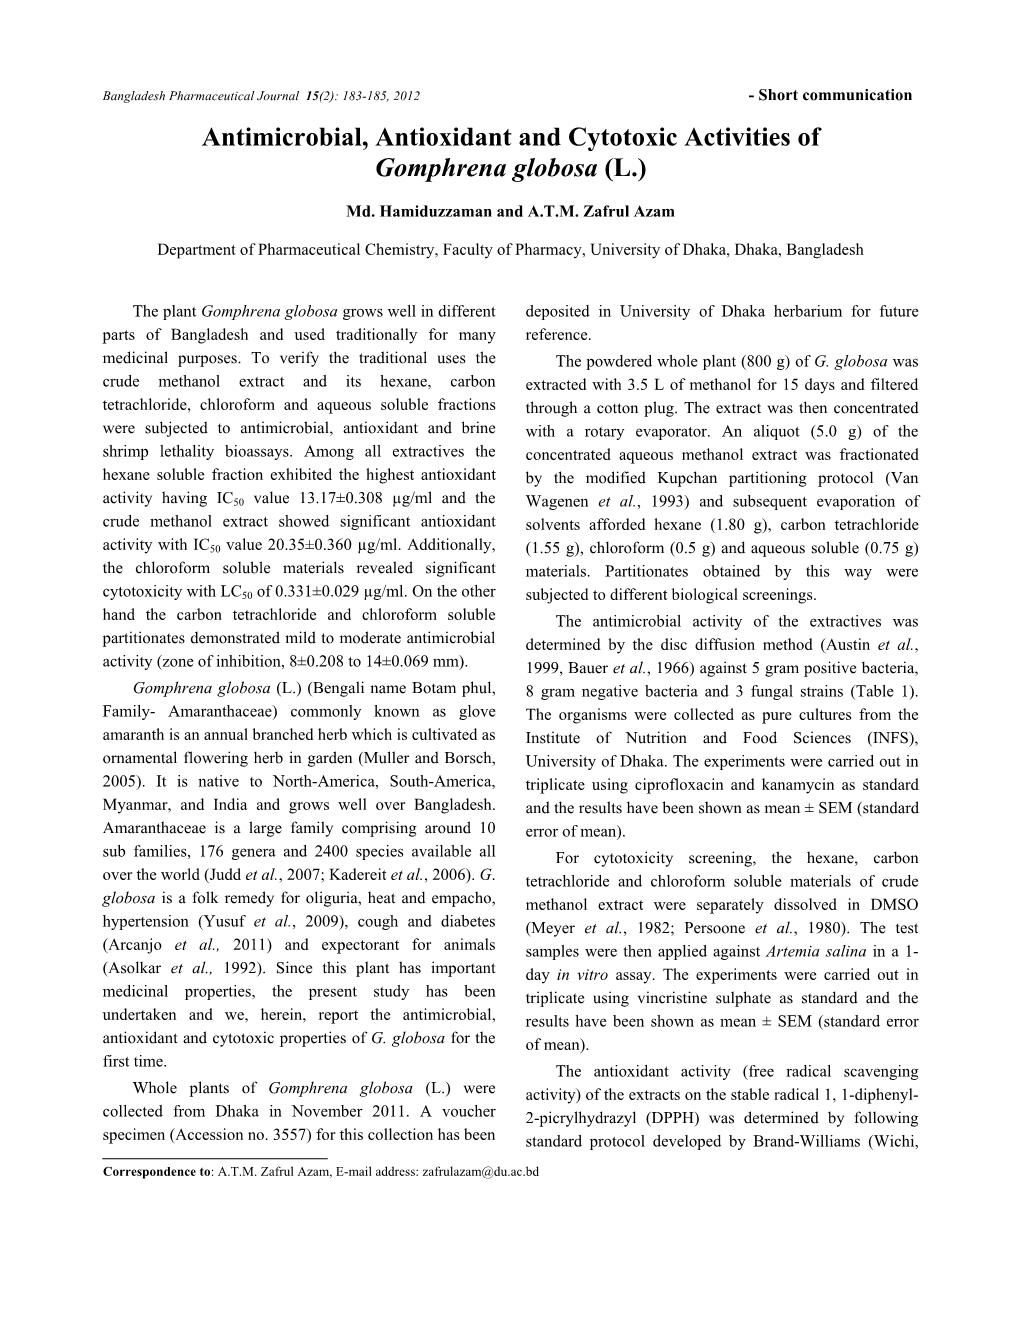 Antimicrobial, Antioxidant and Cytotoxic Activities of Gomphrena Globosa (L.)